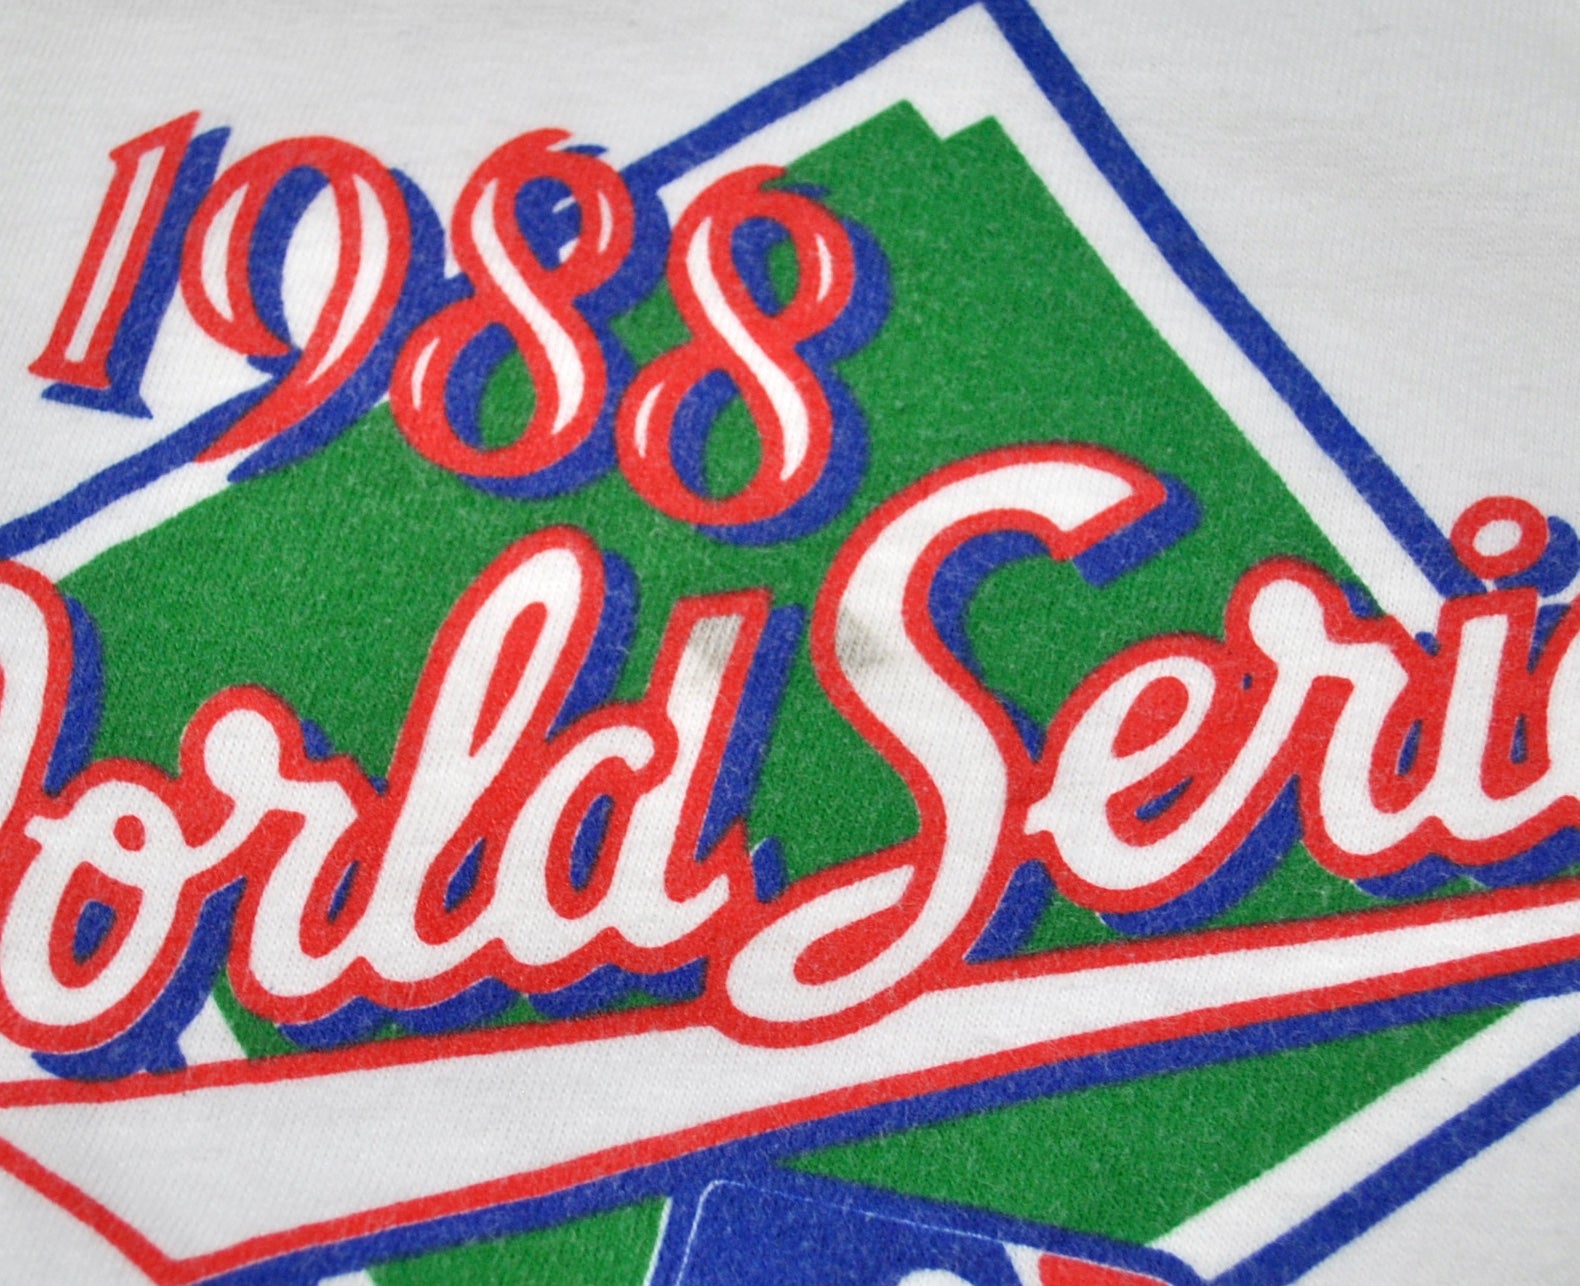 Vintage 1988 World Series Los Angeles Dodgers Oakland Athletics